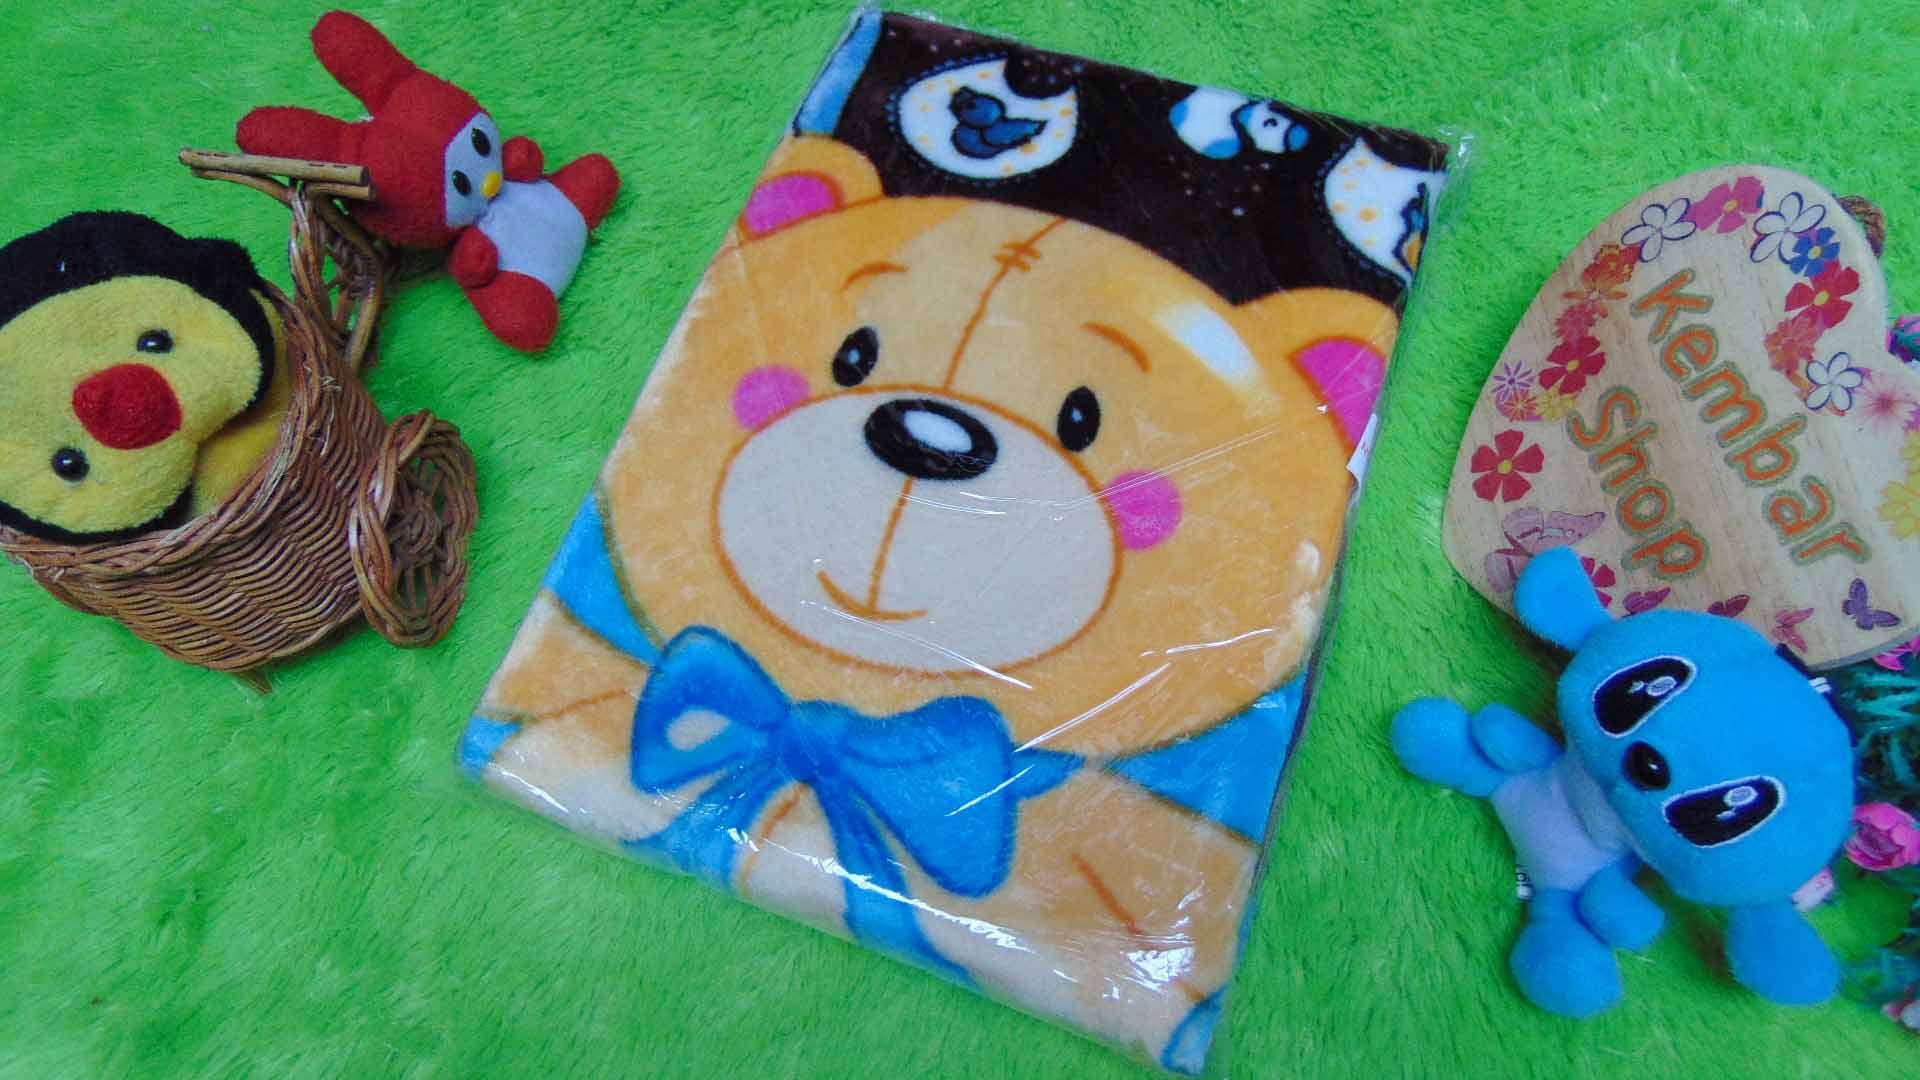 kado bayi baby new born gift hadiah lahiran selimut topi bulu tebal hangat lembut motif beruang cokelat (1)